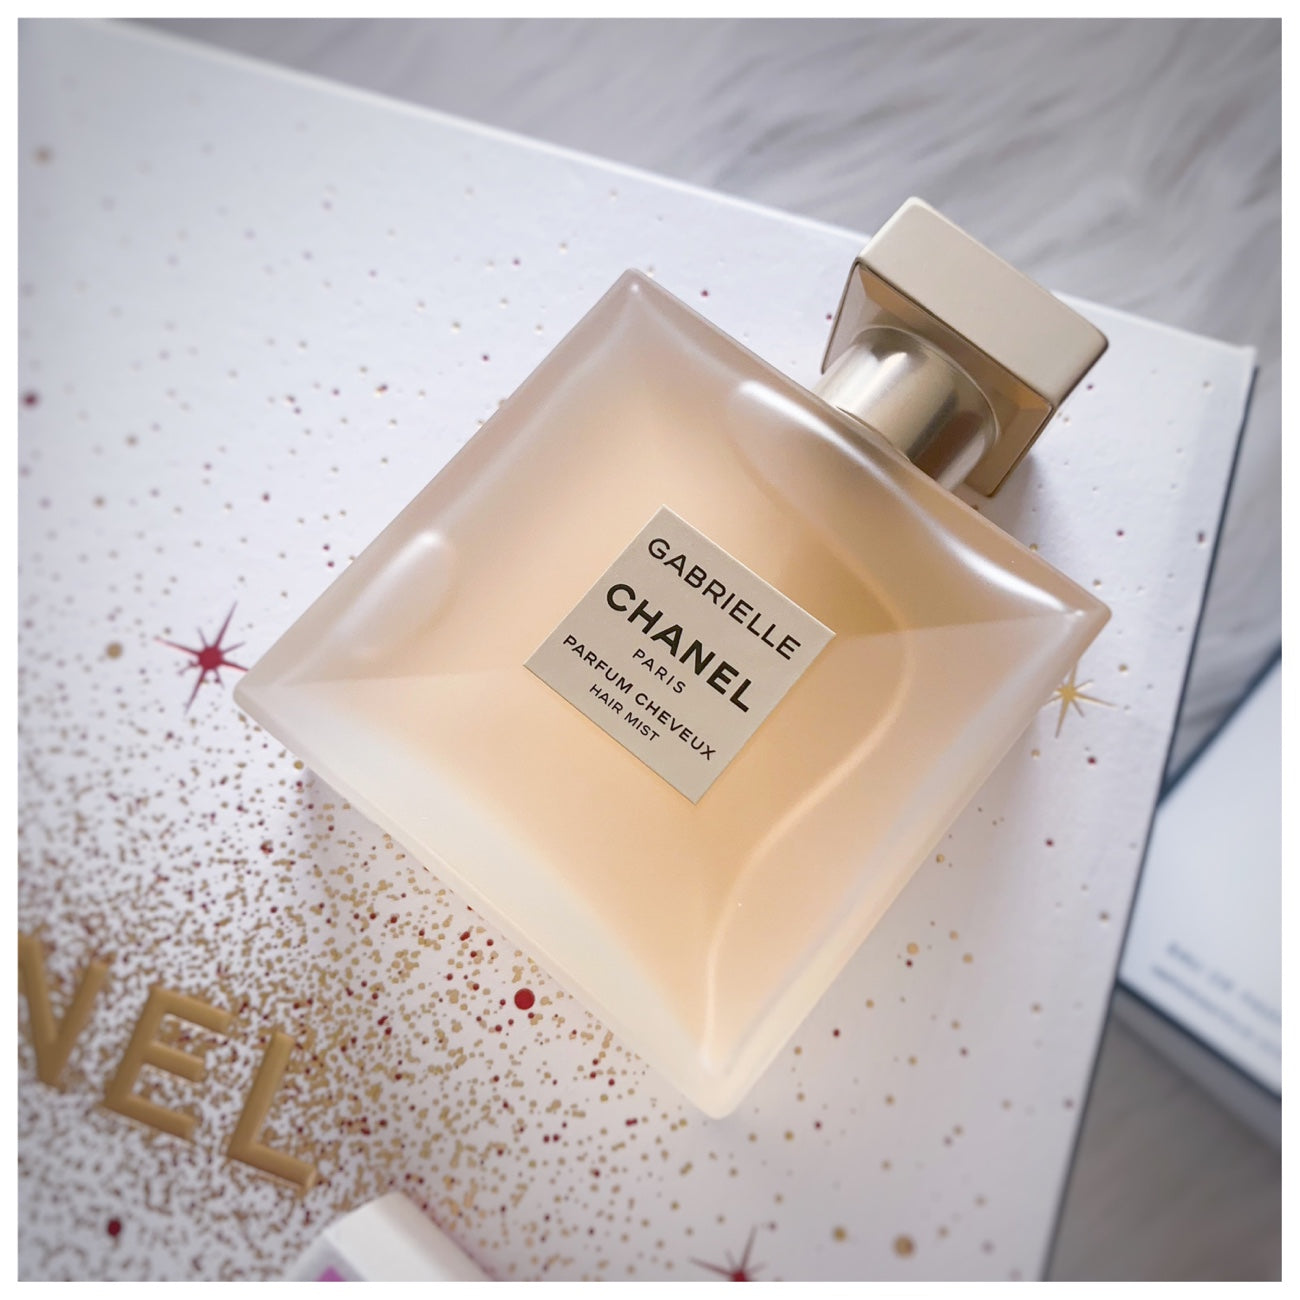  CHANEL Perfume Gabrielle Parfum Cheveux (40 ml) : Beauty &  Personal Care